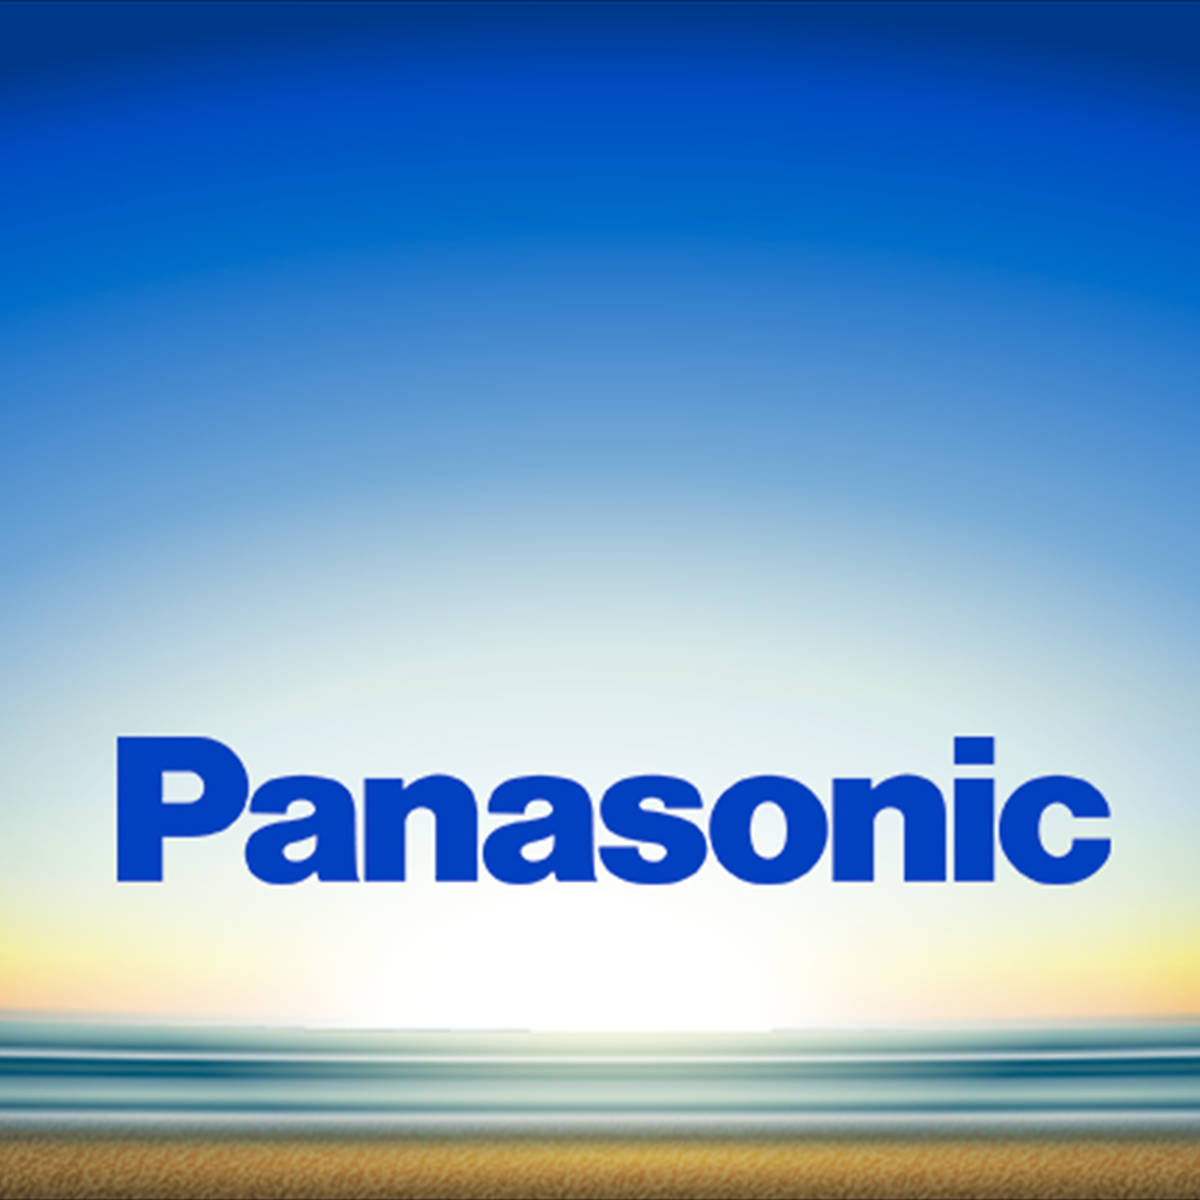 Panasonic And Blue Sky Background